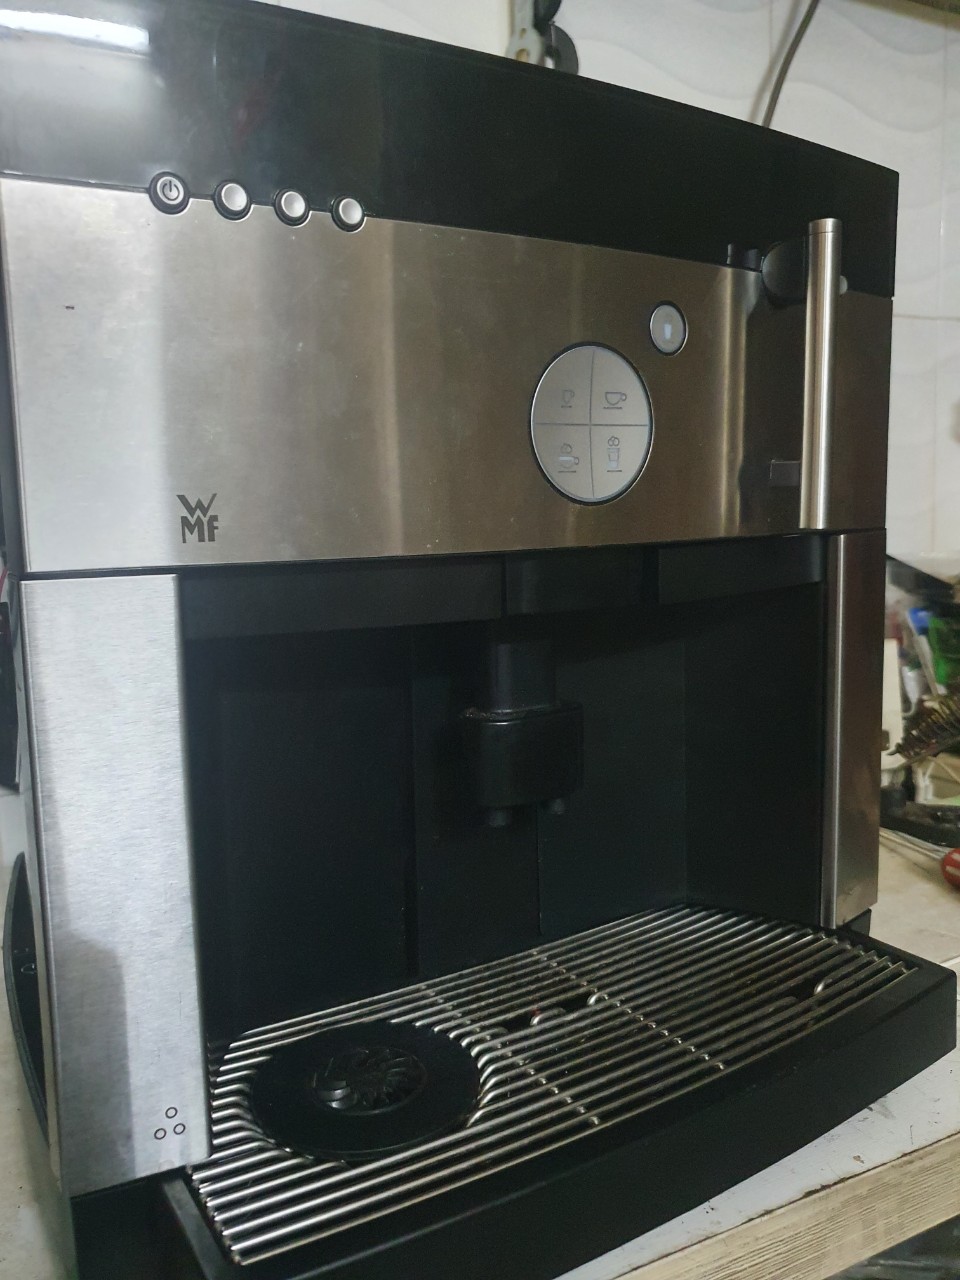 wmf 3 - Sửa máy pha cafe WMF kẹt cối